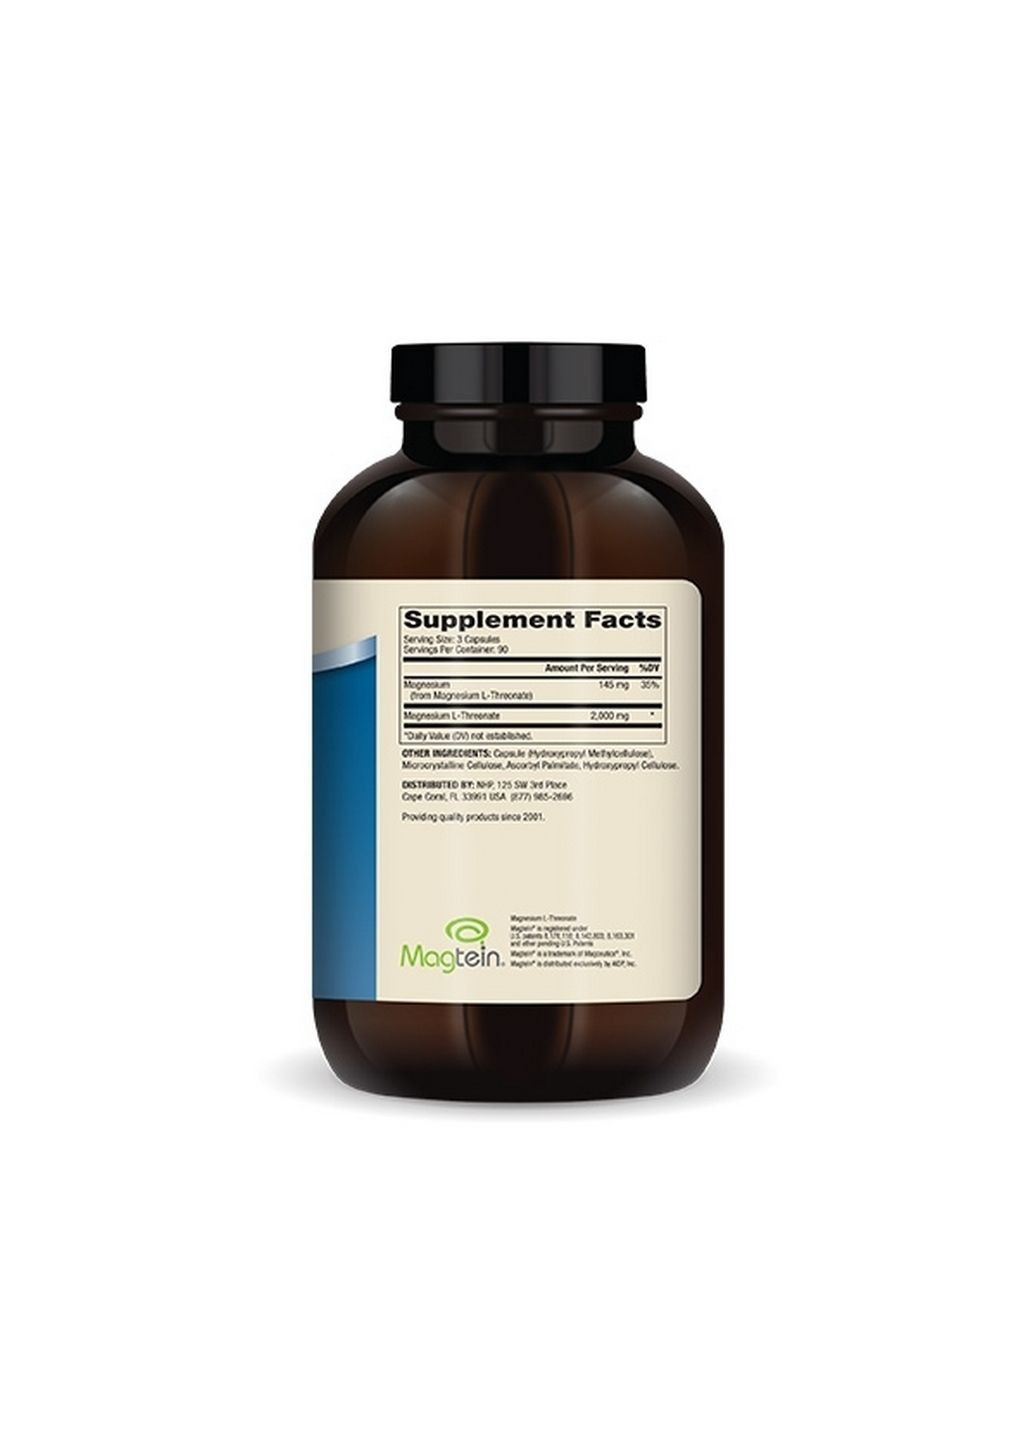 Витамины и минералы Magnesium L-Threonate, 270 капсул Dr. Mercola (293418889)